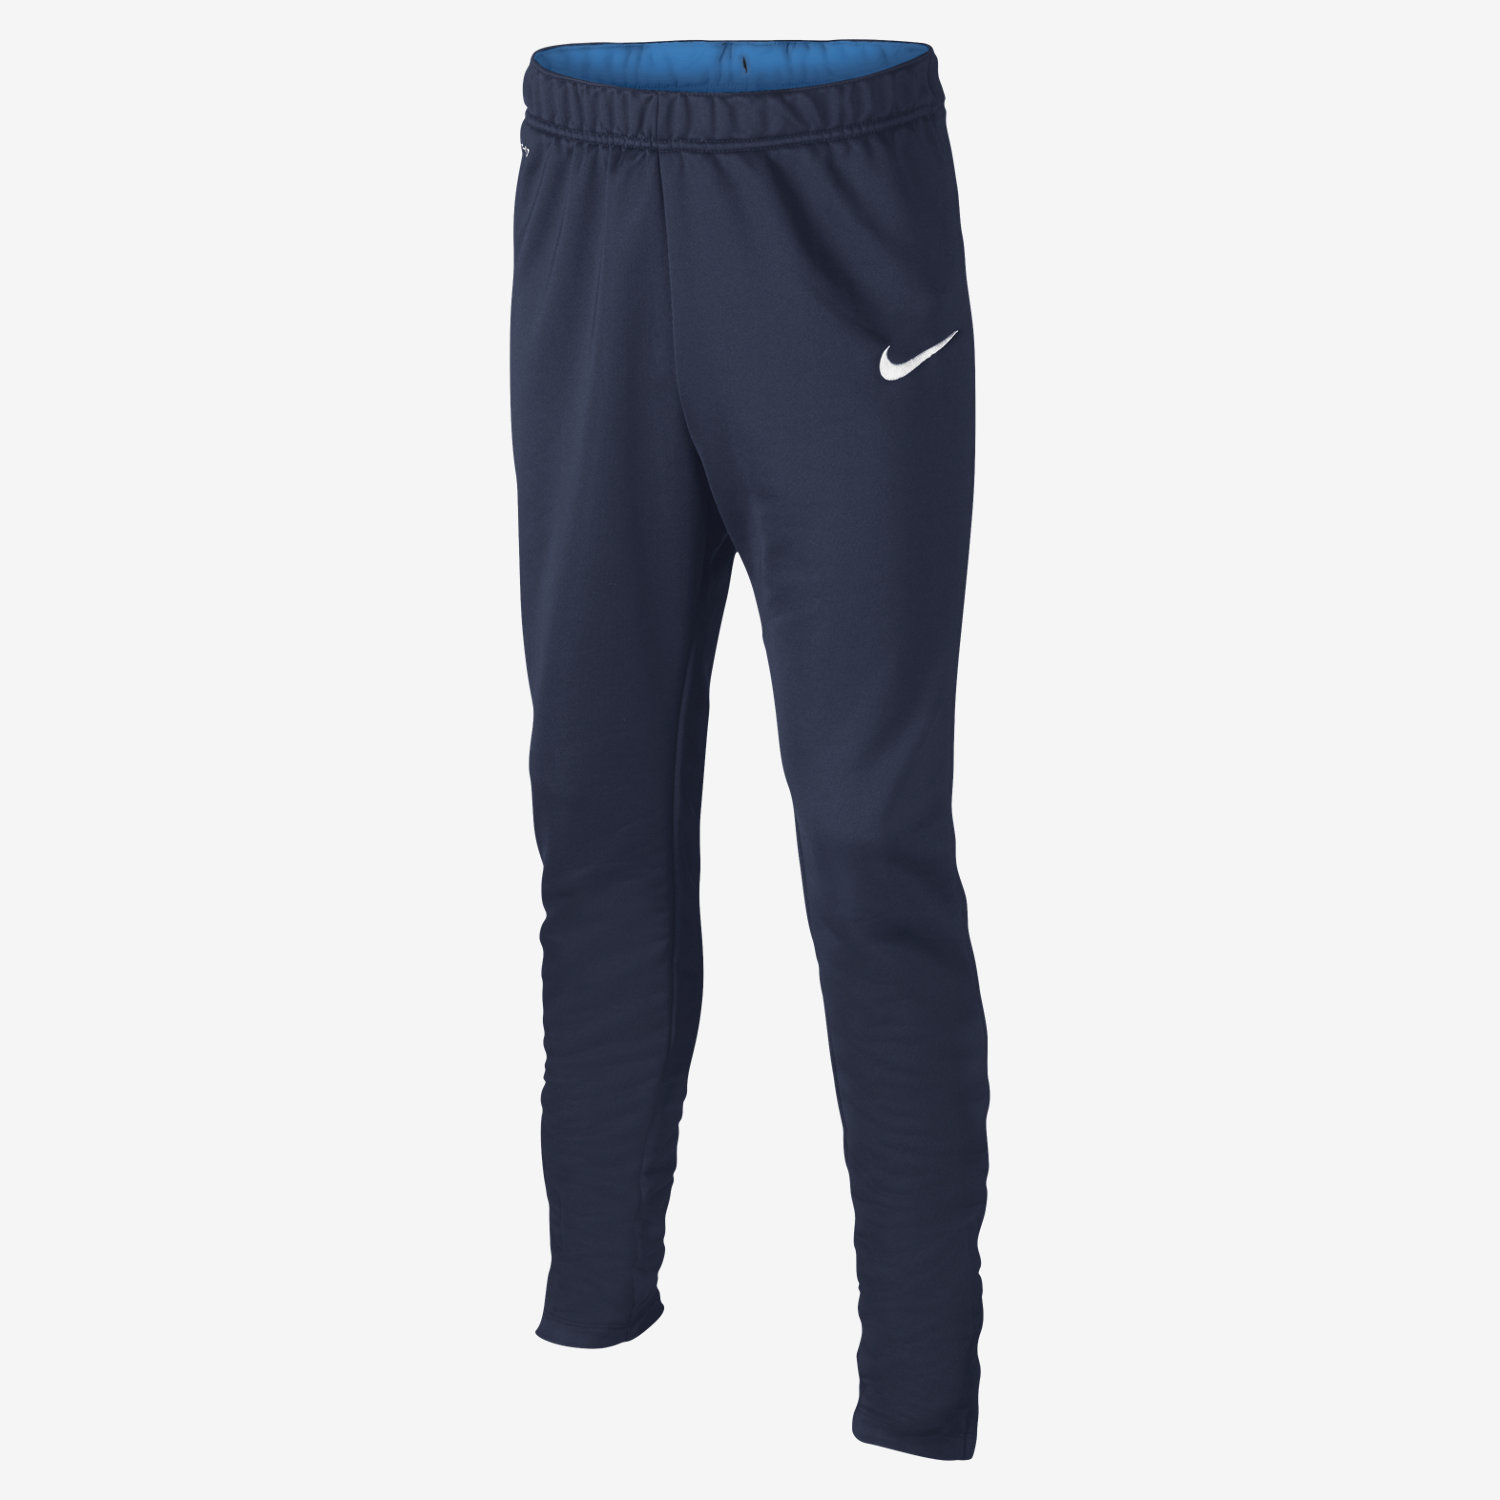 Nike Academy - Older Kids' Football Trousers